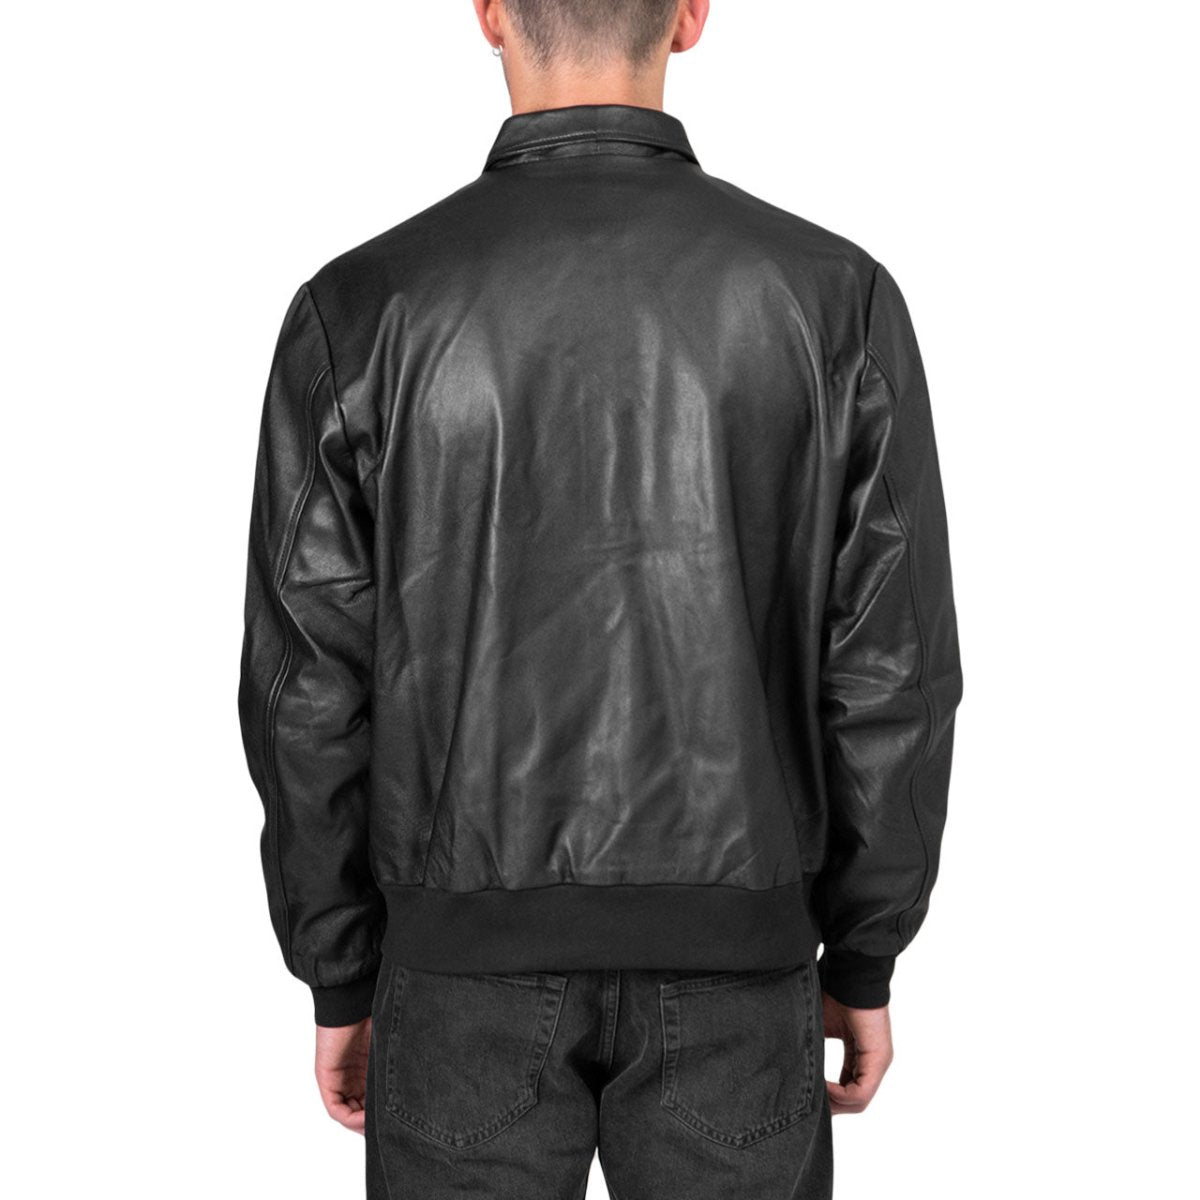 Very Famous Leather Jacket (Schwarz)  - Allike Store